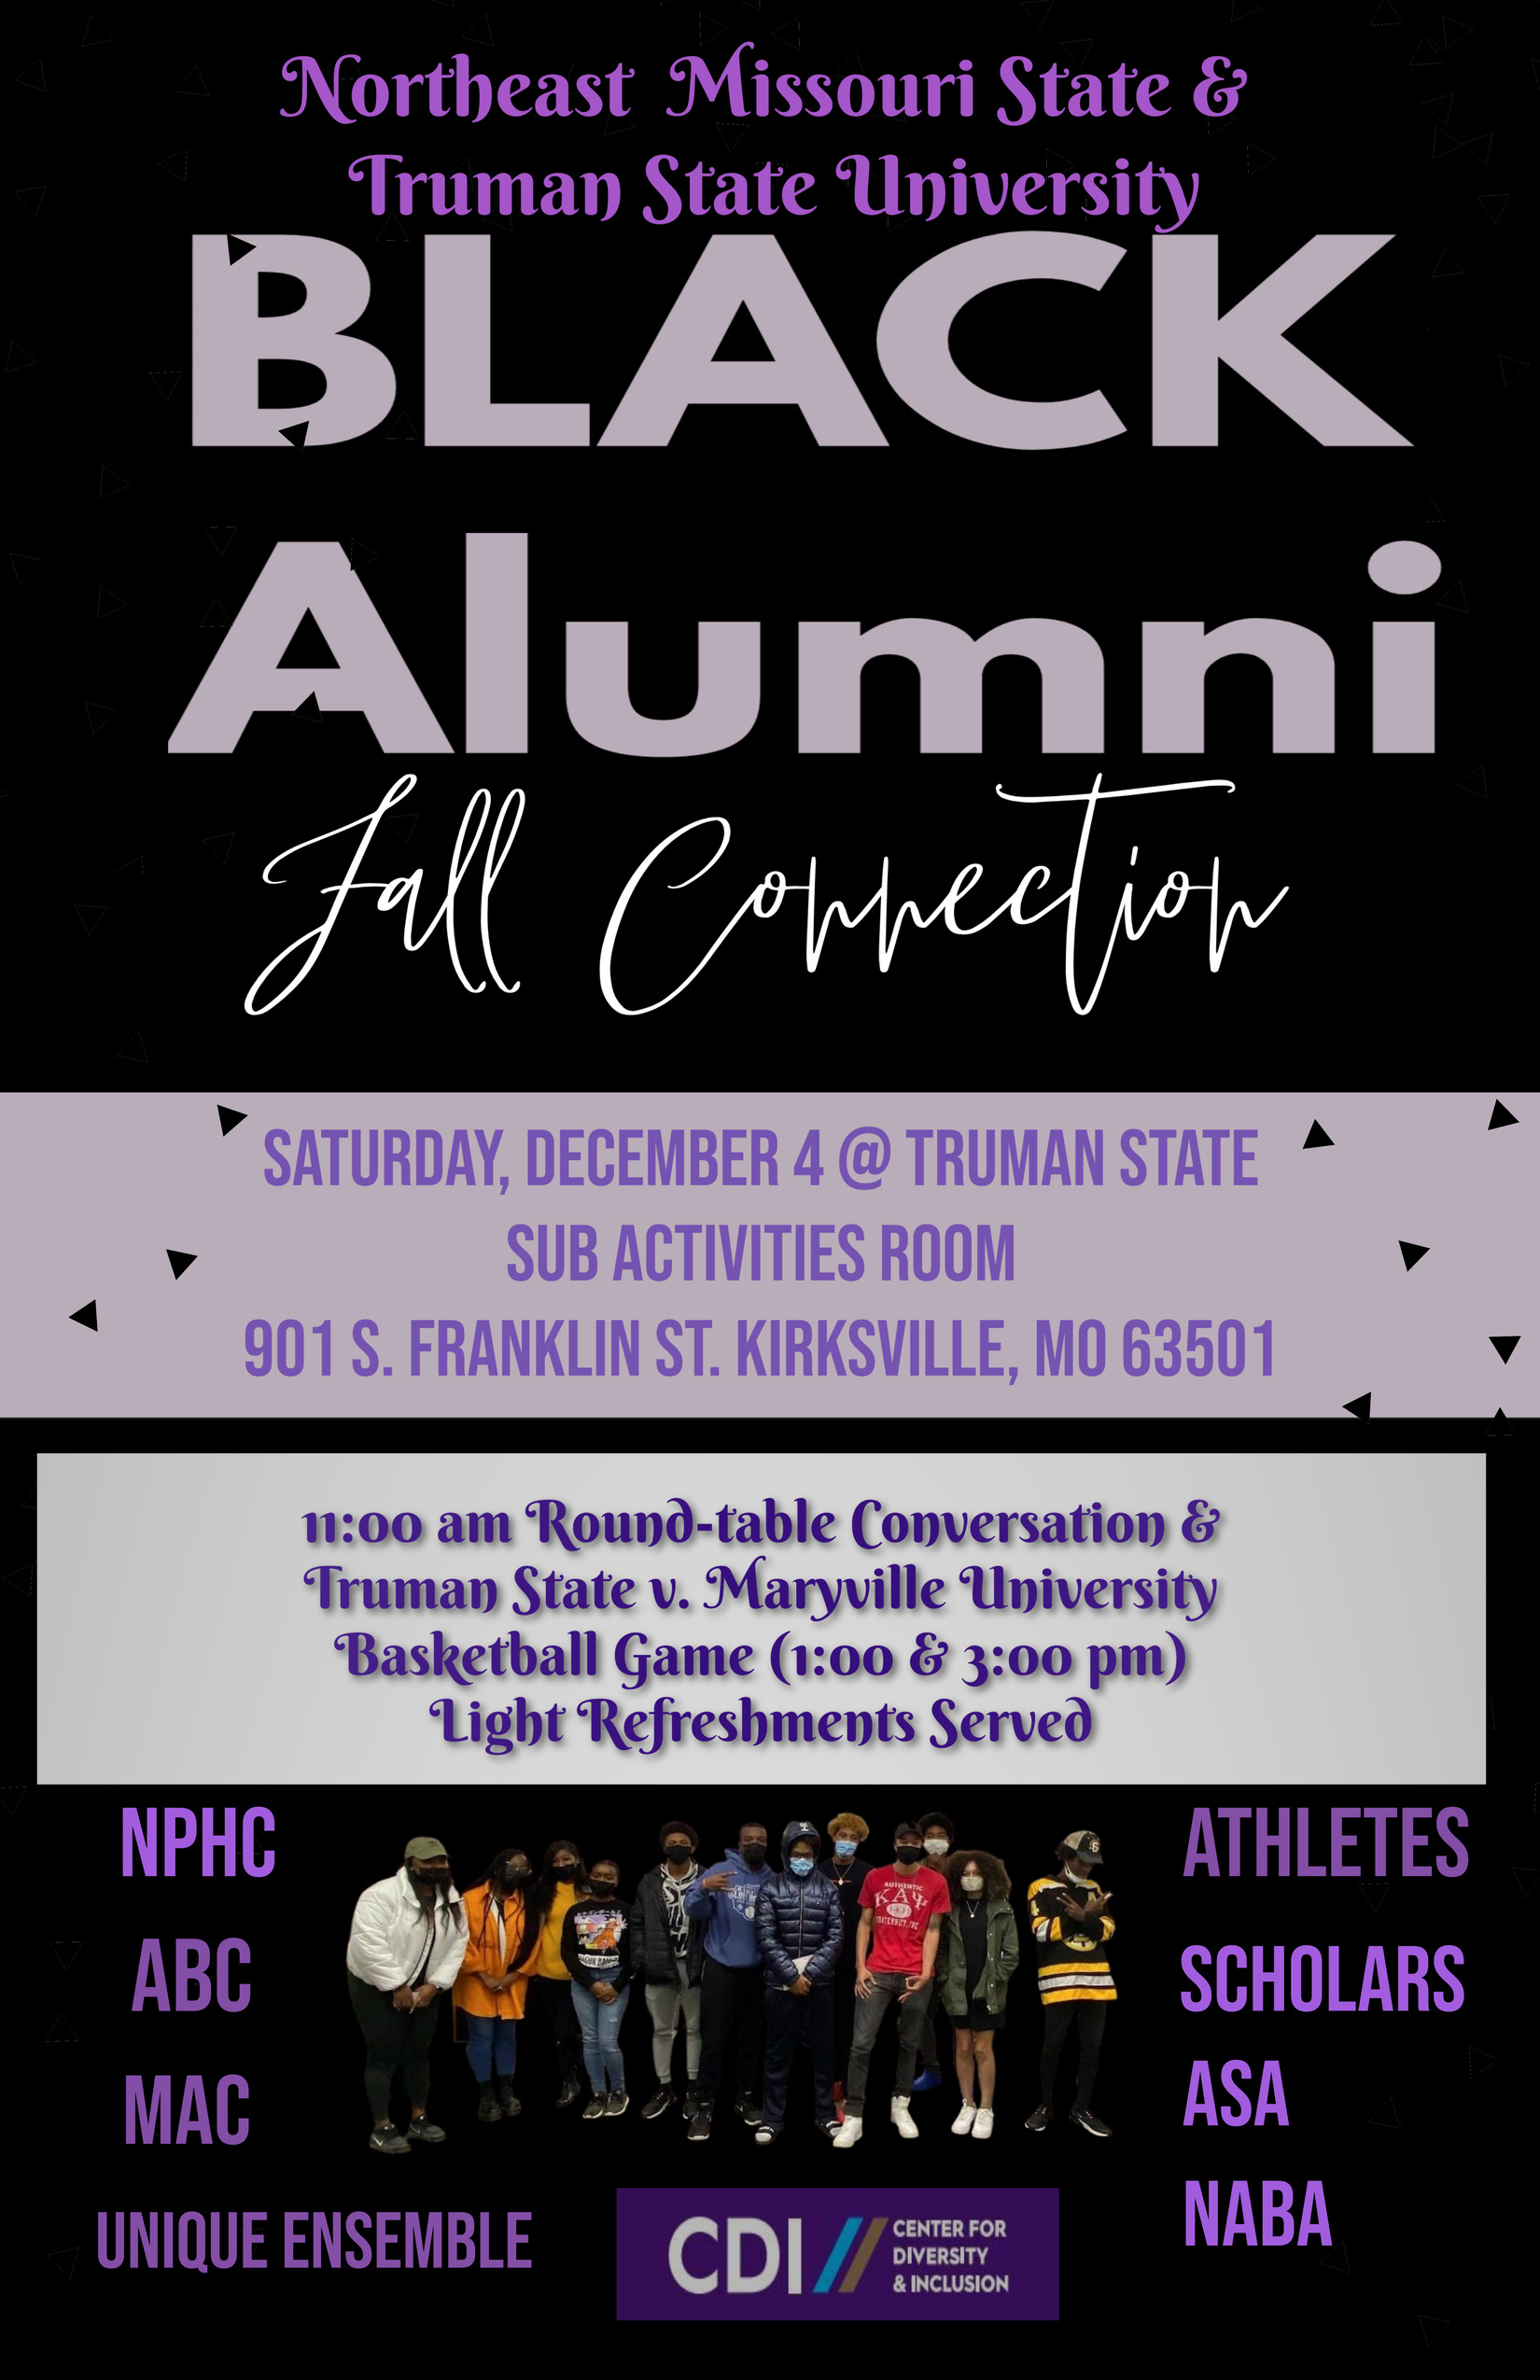 Black Alumni Fall Connection (1)